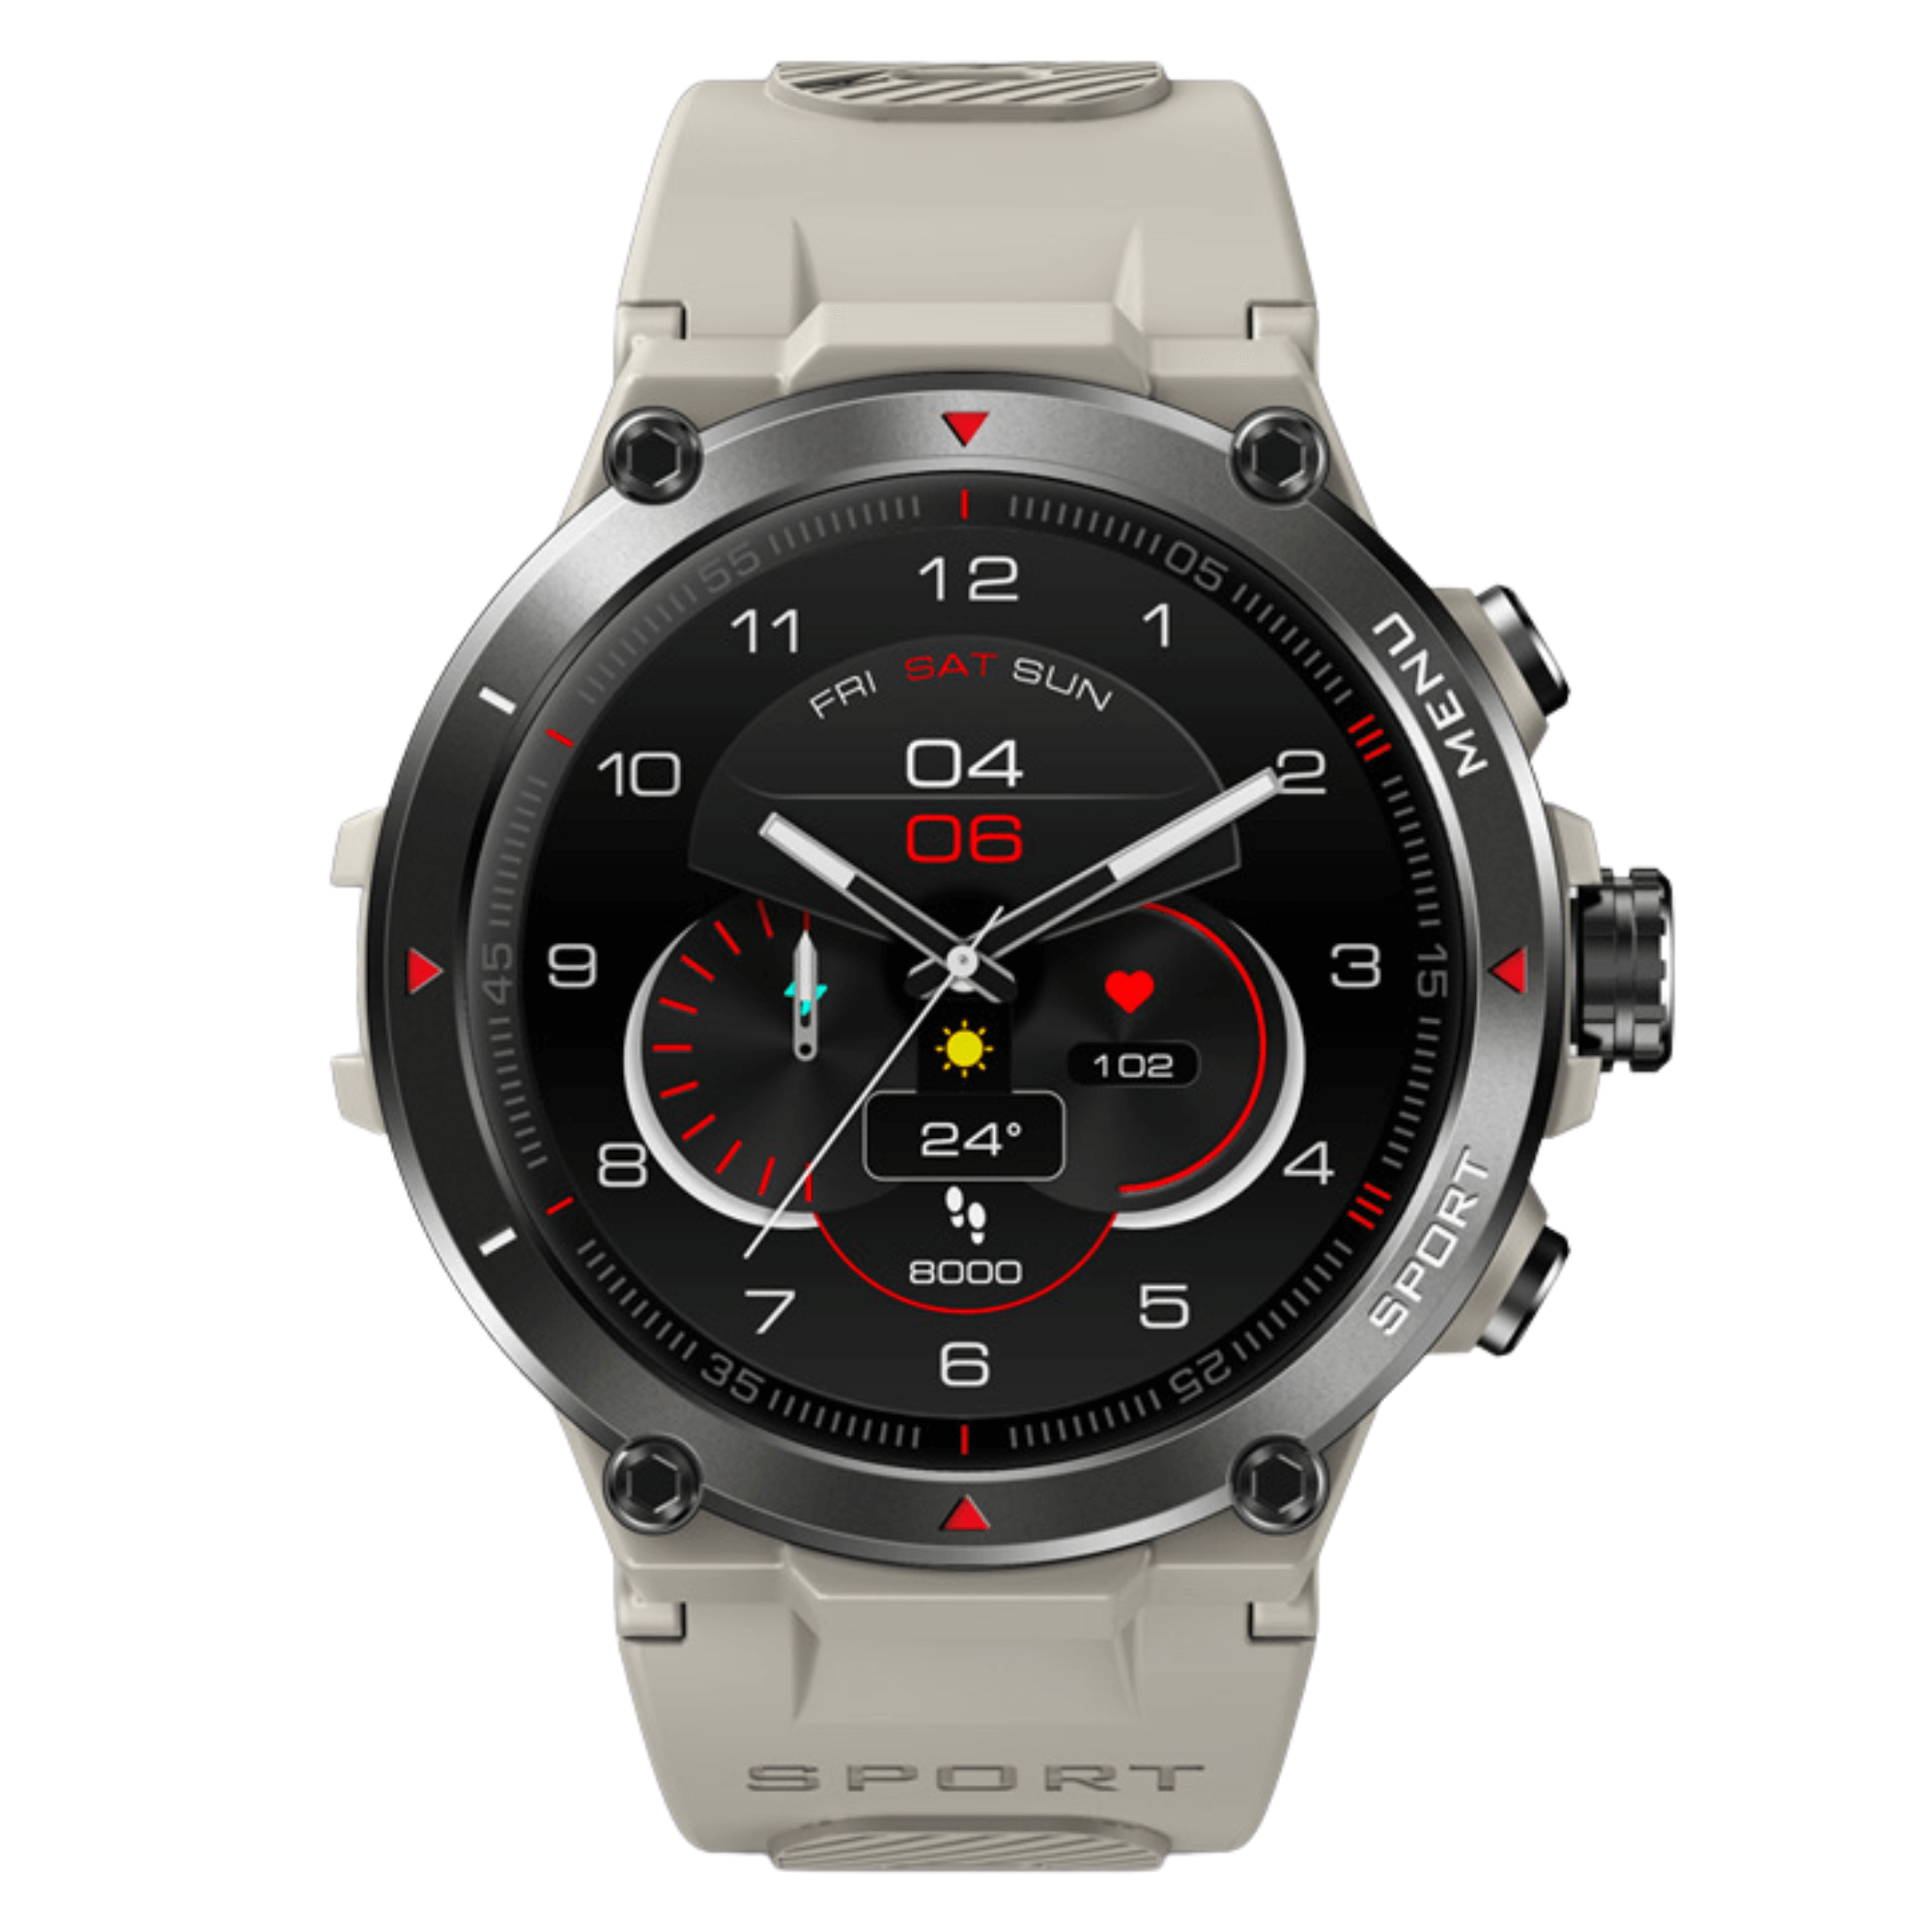 Smartwatch ZEBLAZE Stratos 2 - Relógio Inteligente Esportivo - relogiosbenyar - aço inoxidável, promo, zeblaze - relogiosbenyar.com.br